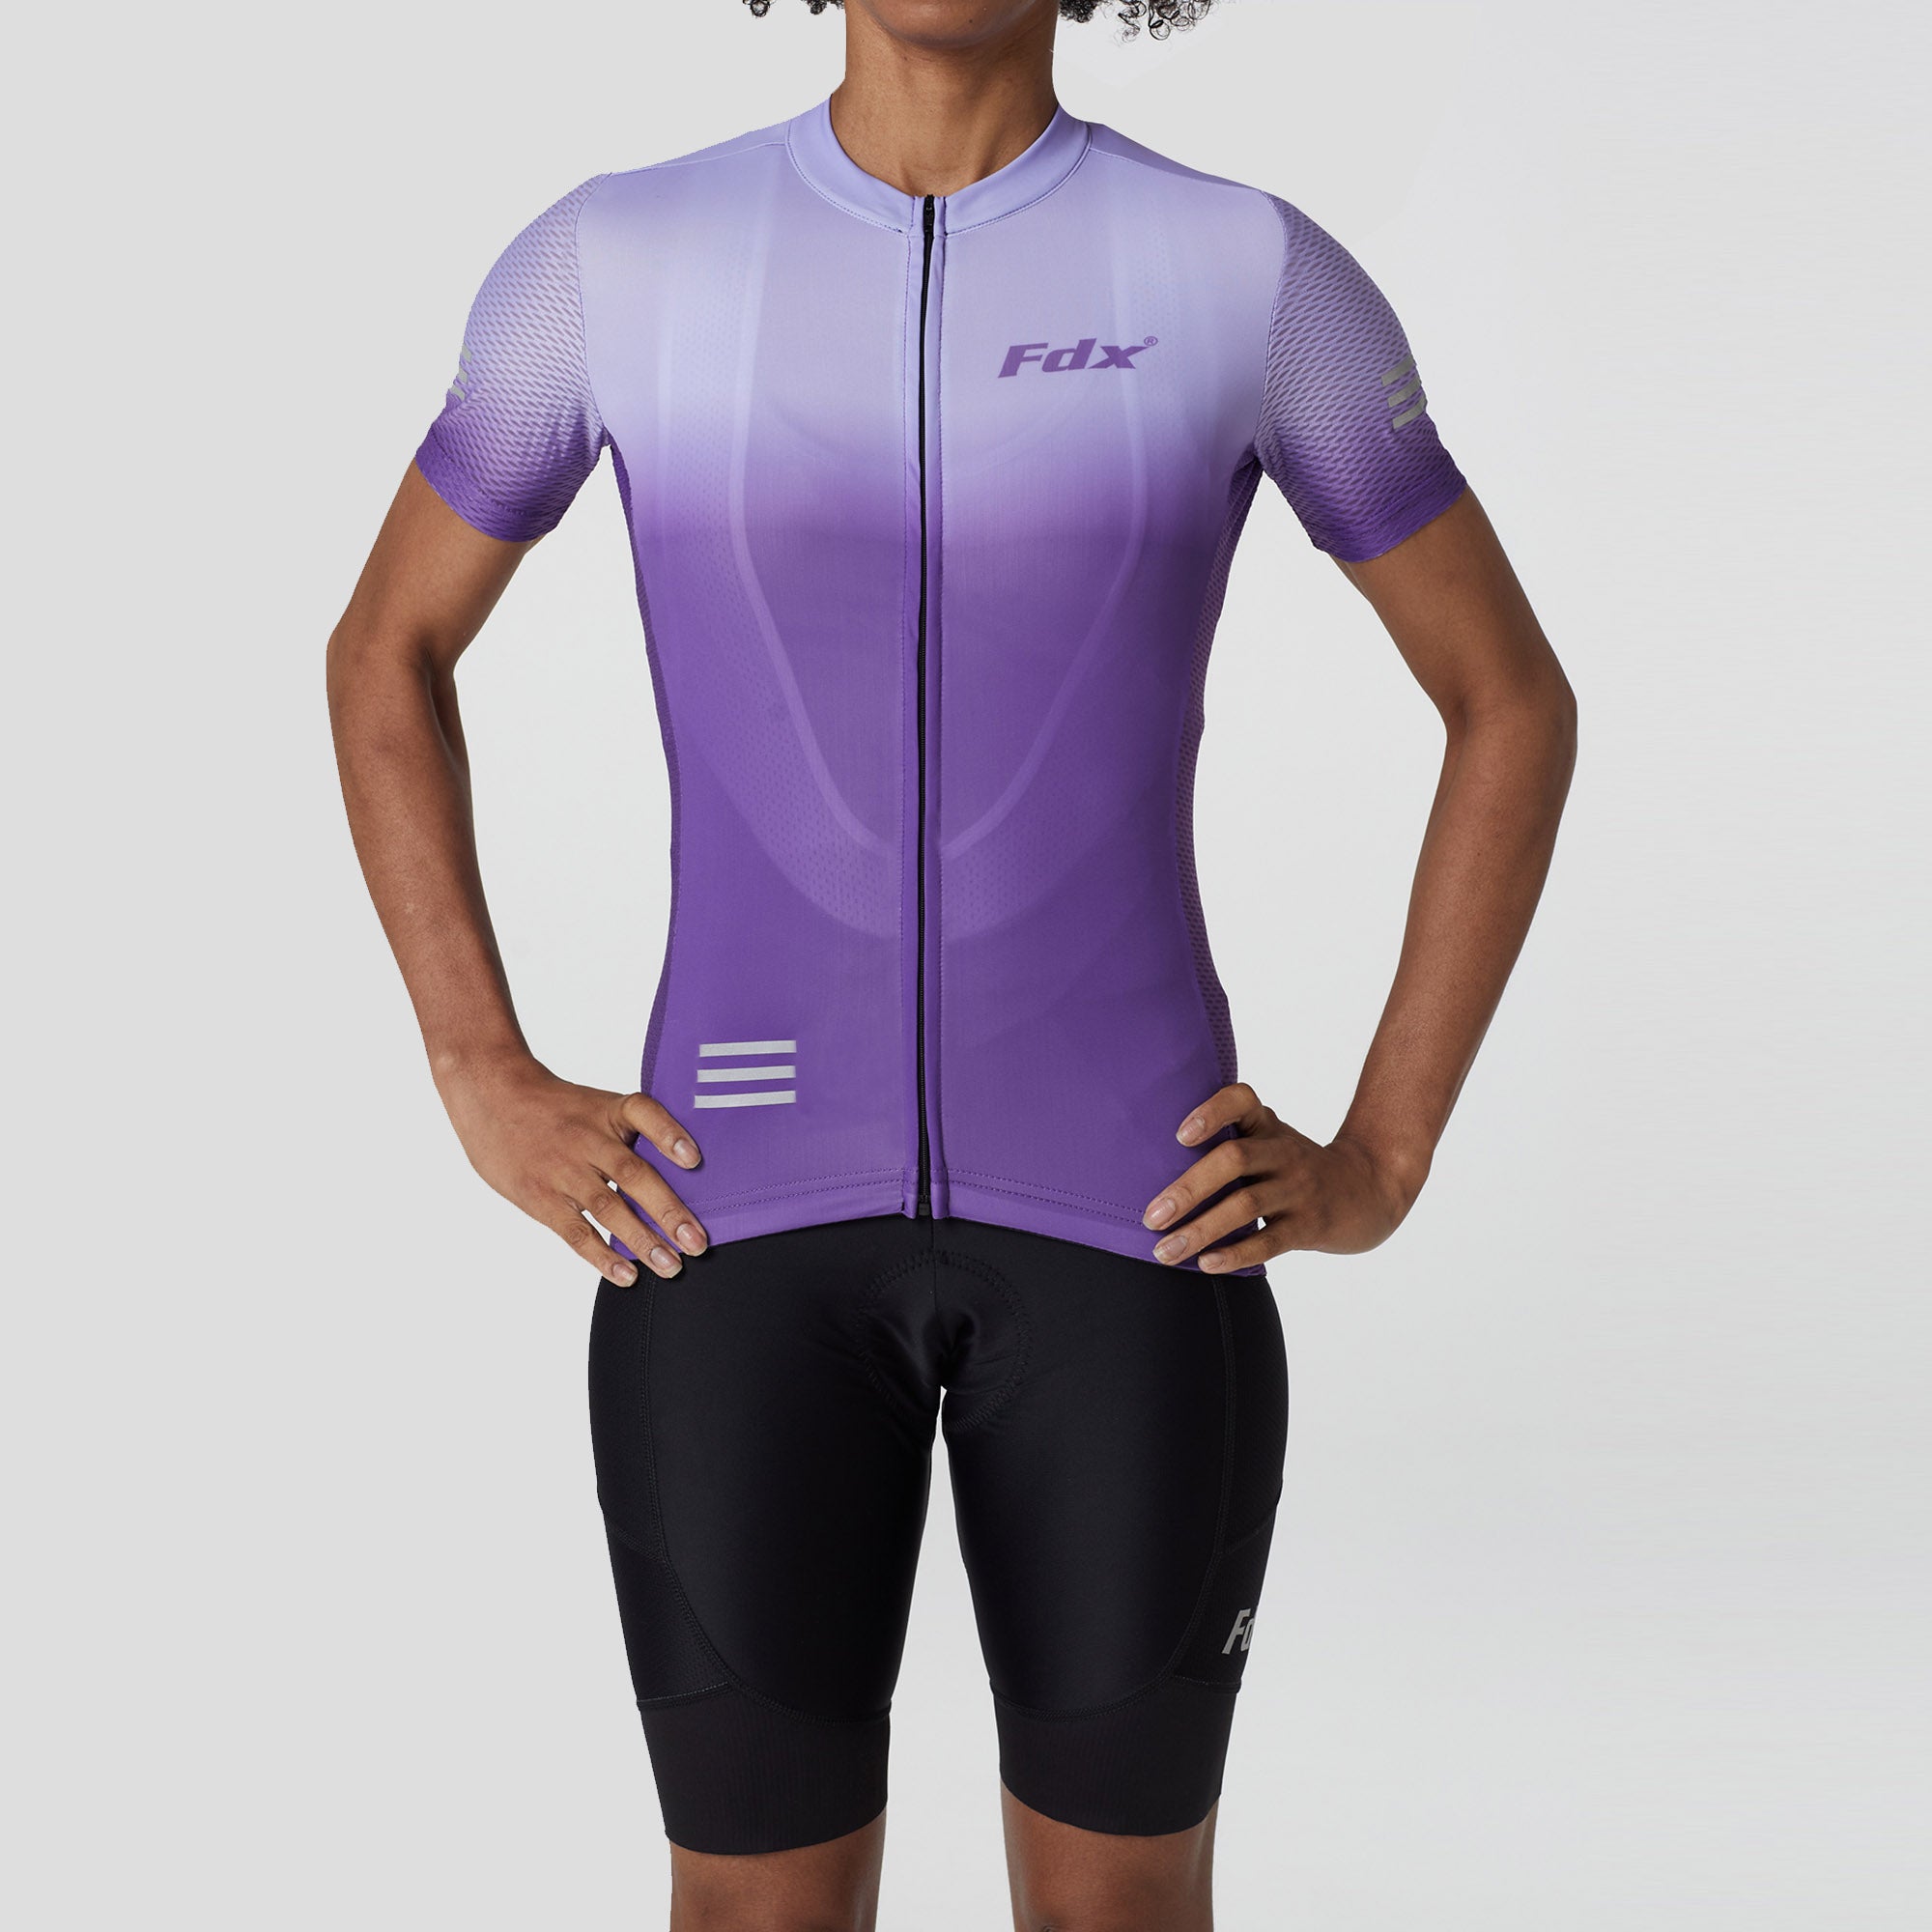 Fdx Women's Purple Short Sleeve Cycling Jersey & 3D Cushion Padded Bib Shorts Best Summer Road Bike Wear Light Weight, Hi-viz Reflectors & Pockets - Duo